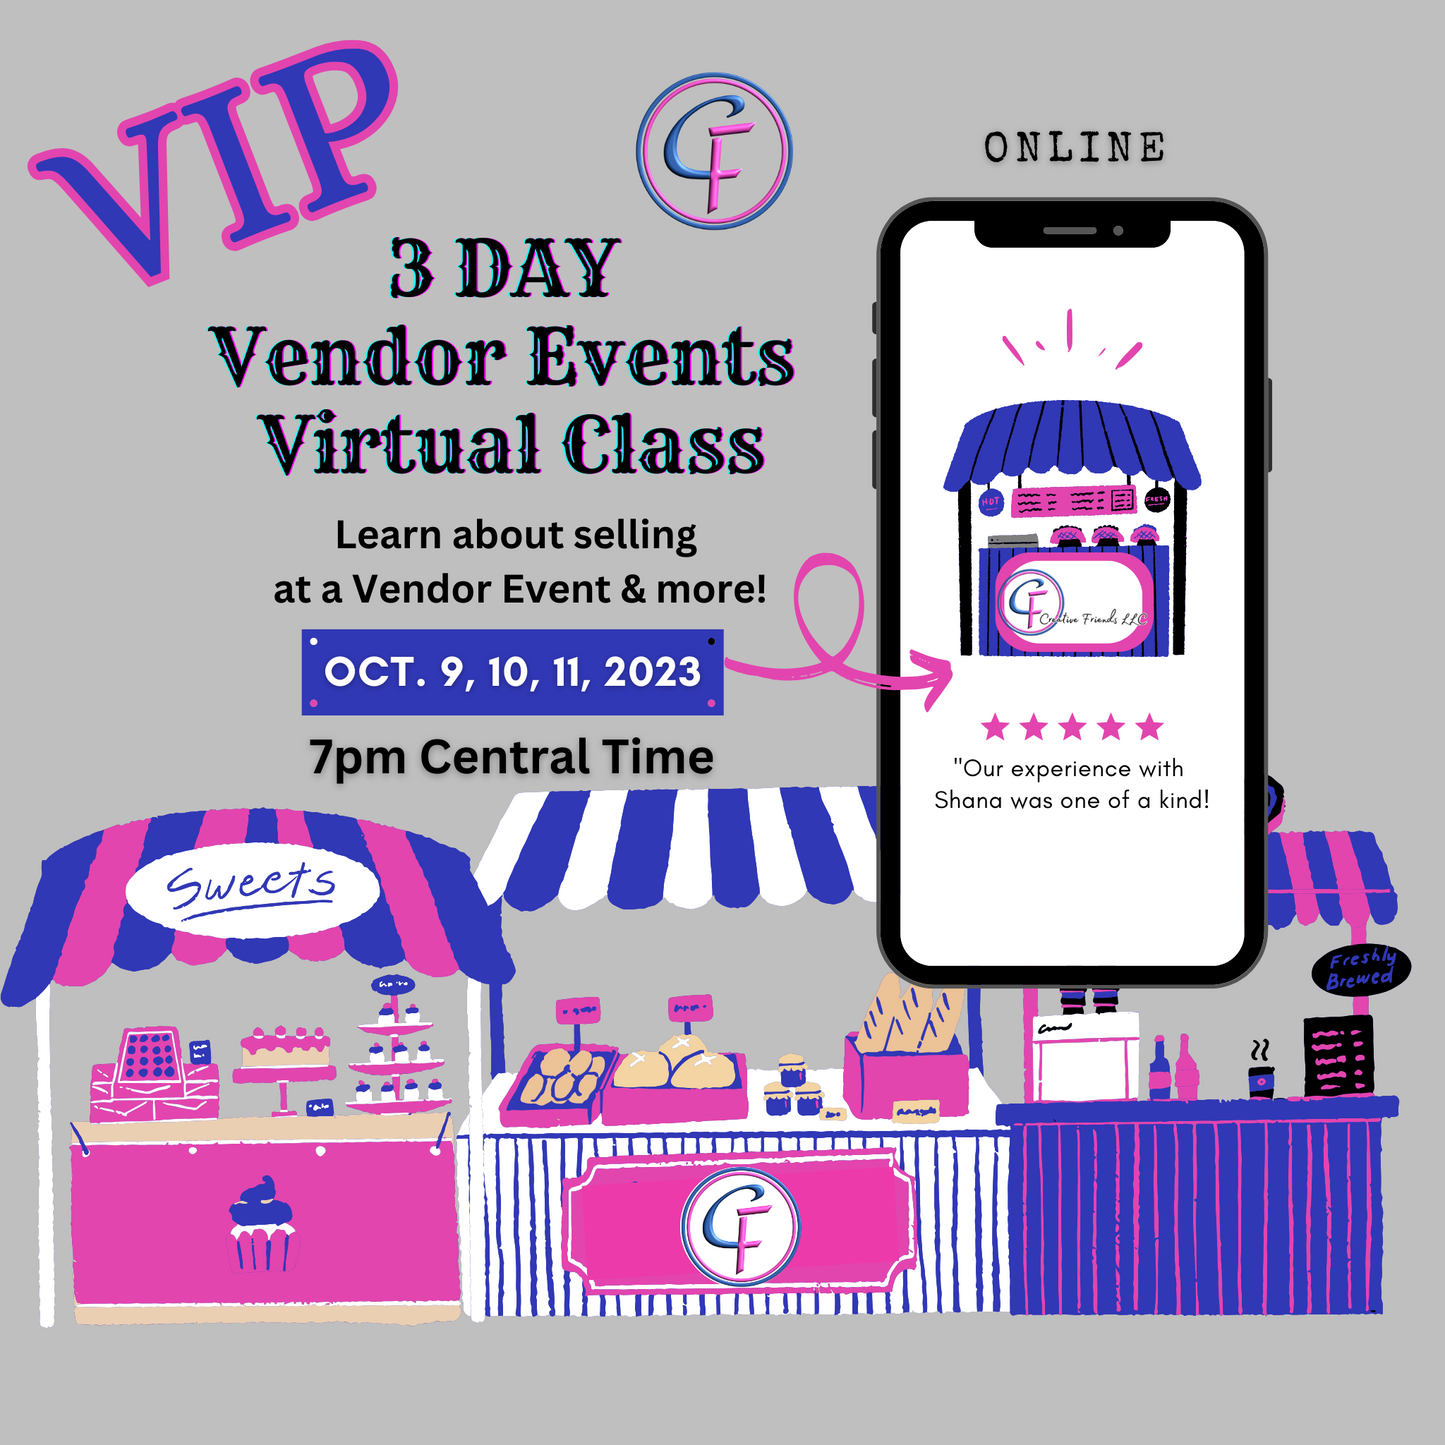 VIP 3-Day Vendor Events Virtual Class